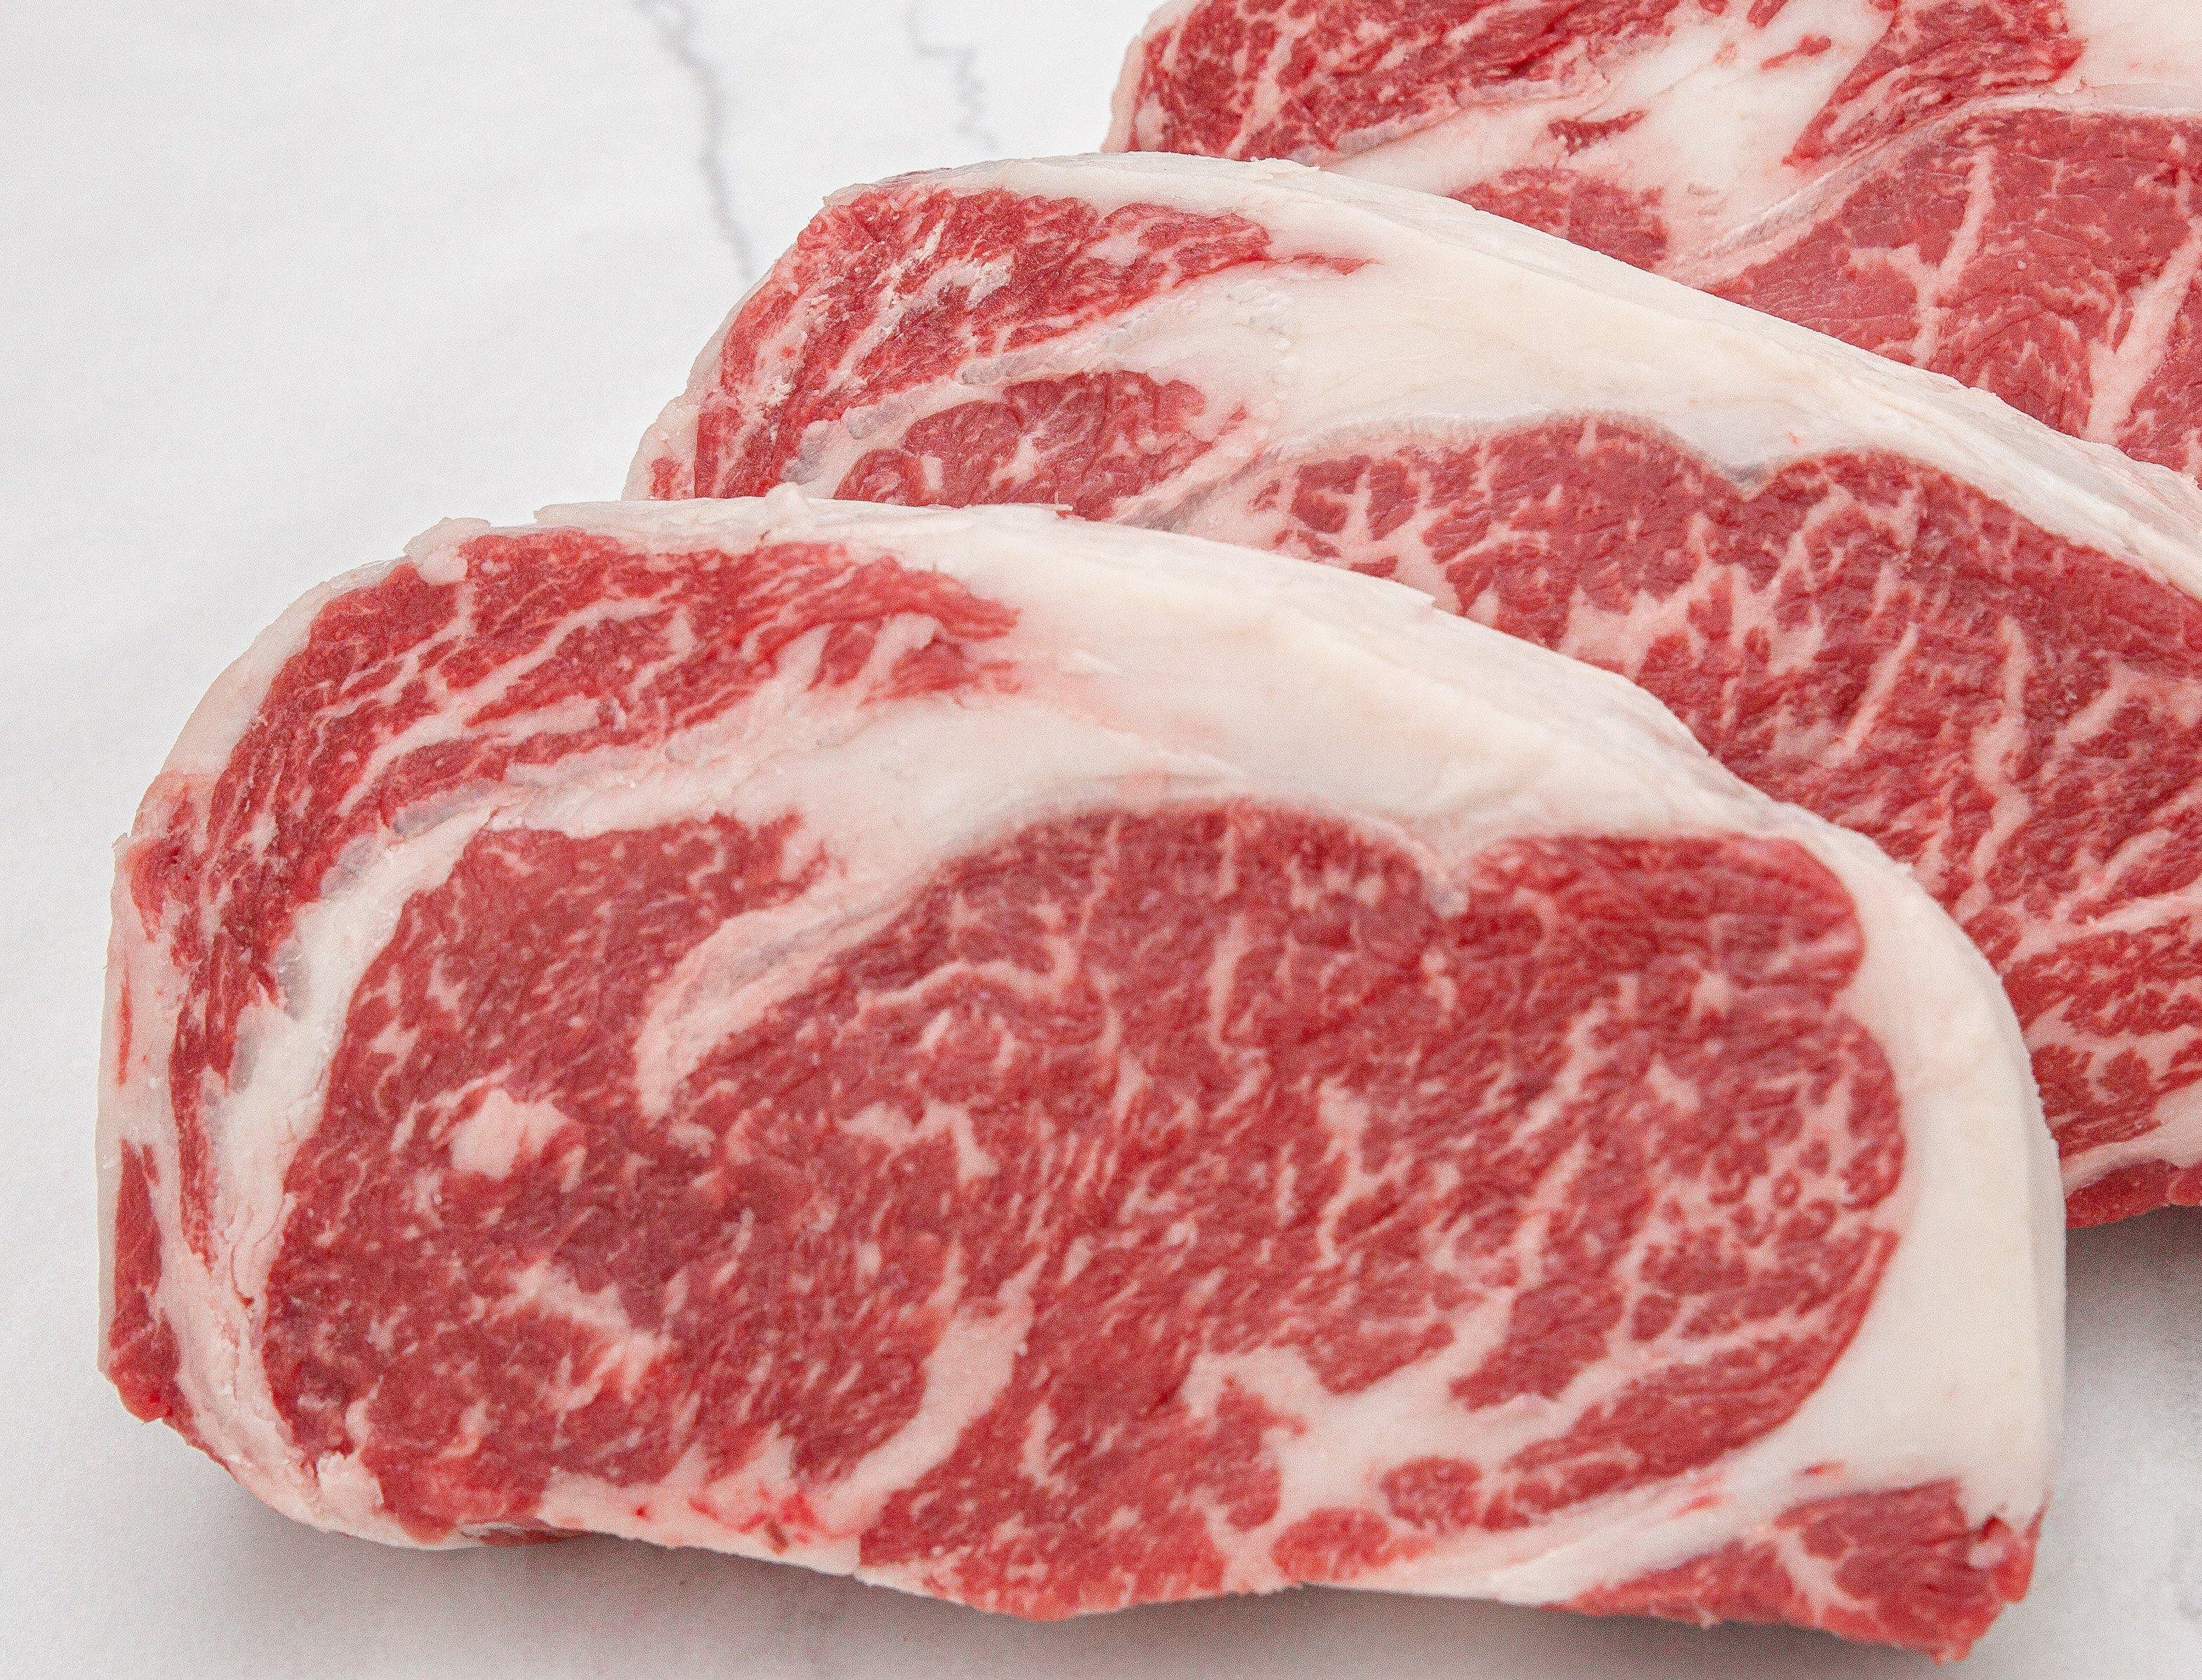 (12 oz.) USDA Prime Dry-Aged Boneless Rib Steak